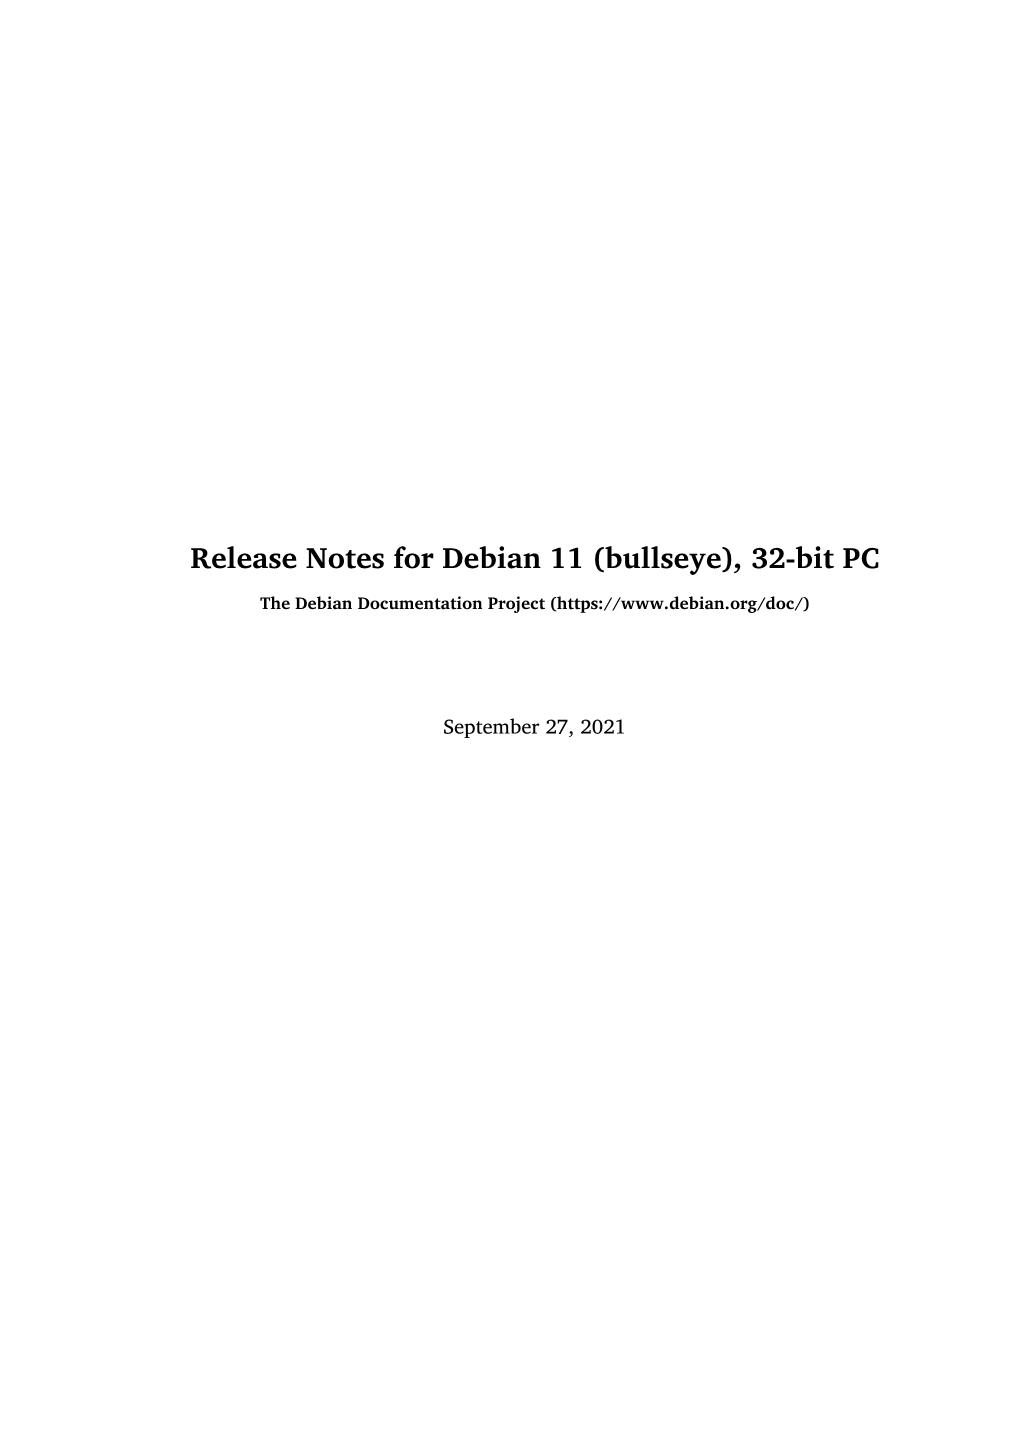 Release Notes for Debian 11 (Bullseye), 32-Bit PC